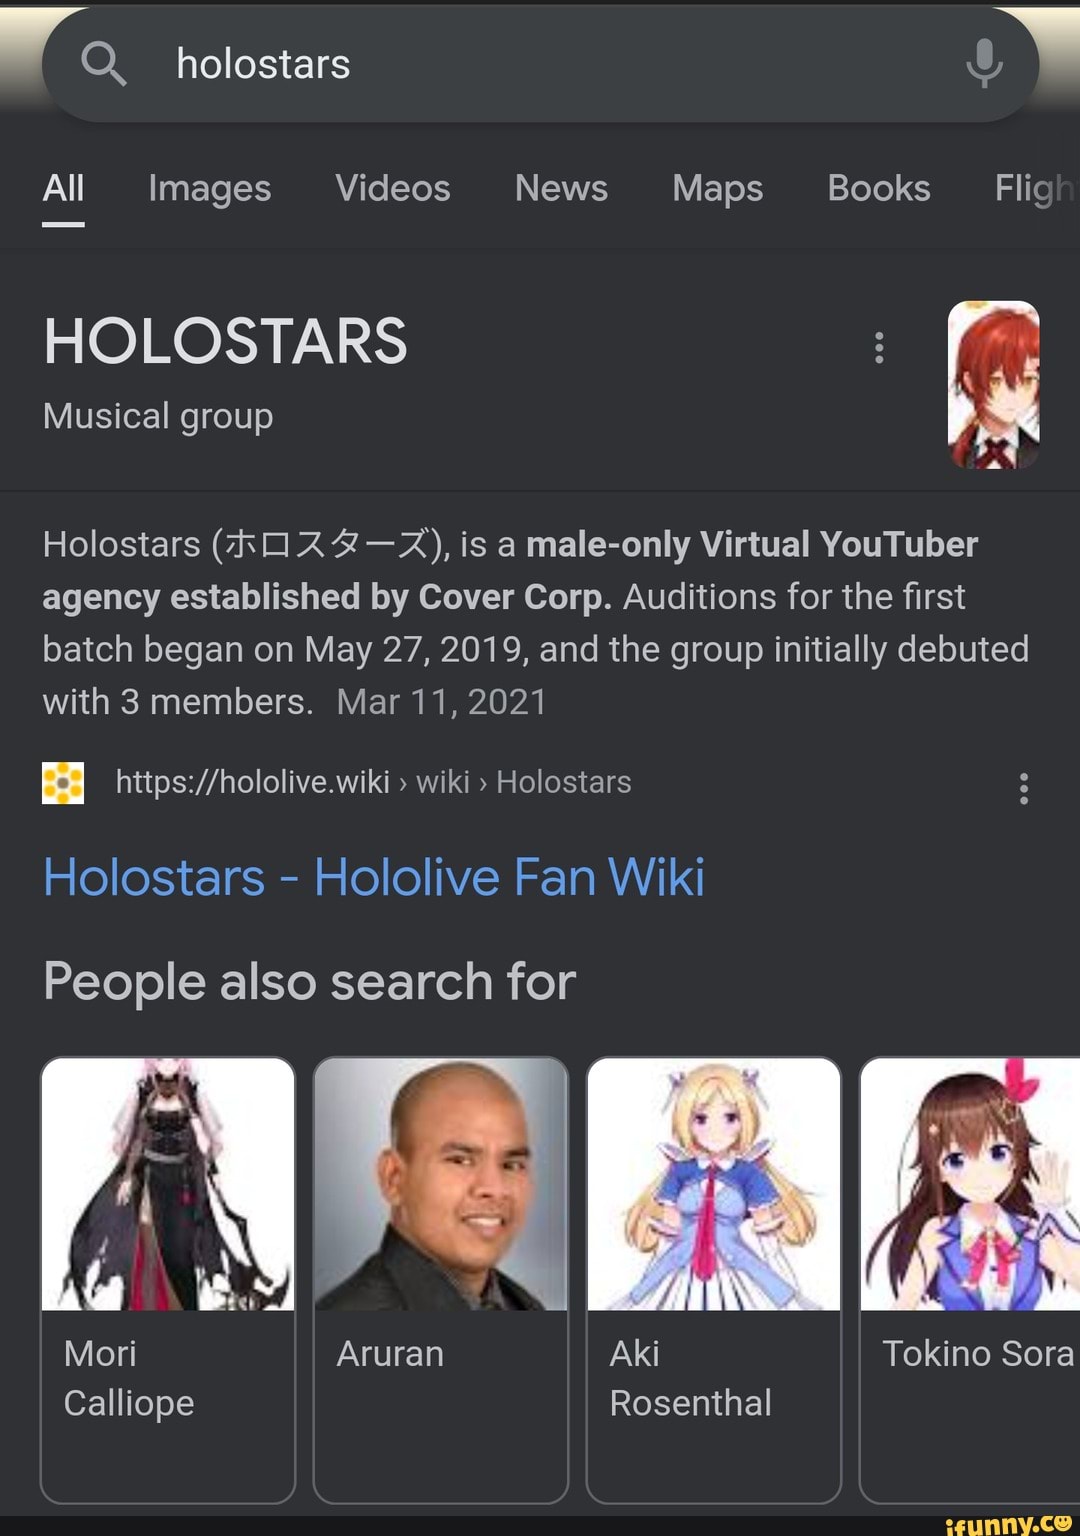 Tokino Sora - Hololive Fan Wiki